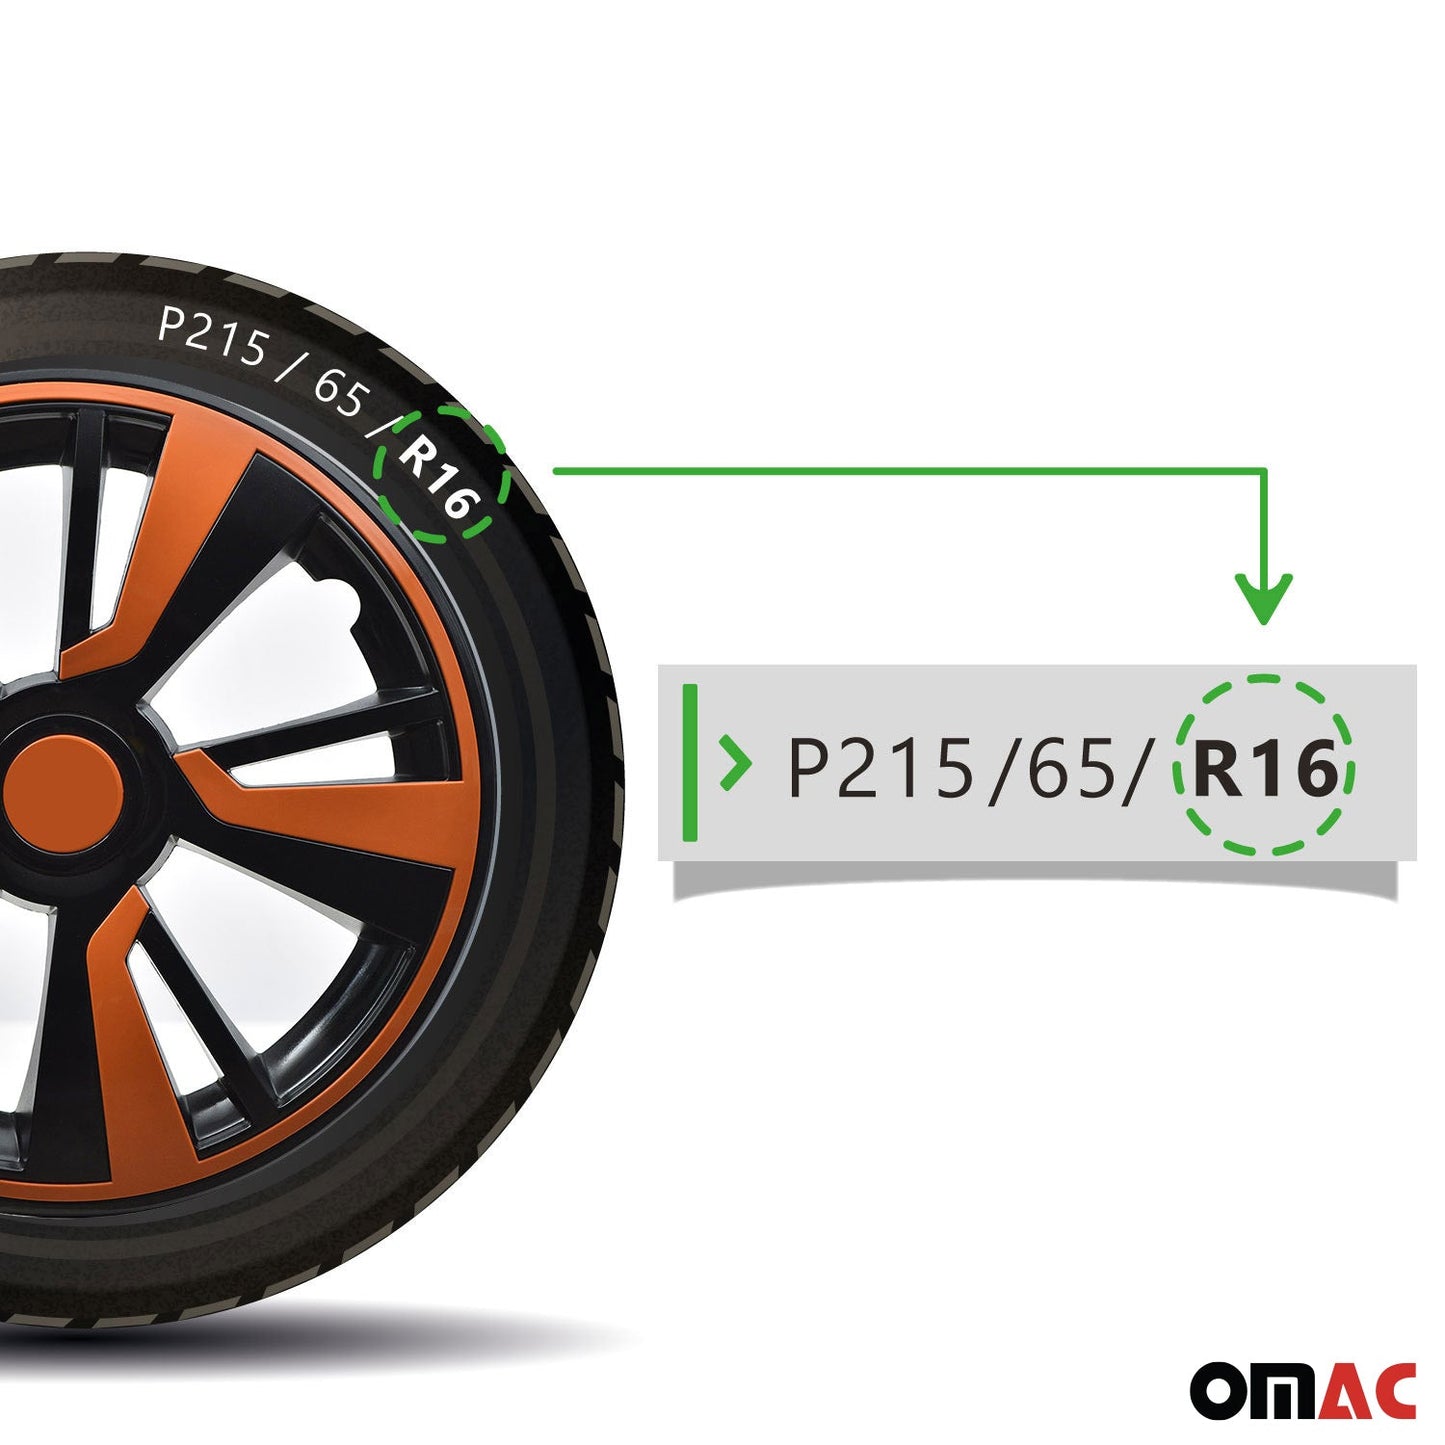 OMAC 16" Hubcaps Wheel Rim Cover Black with Orange Insert 4pcs Set VRT99FR243B16O